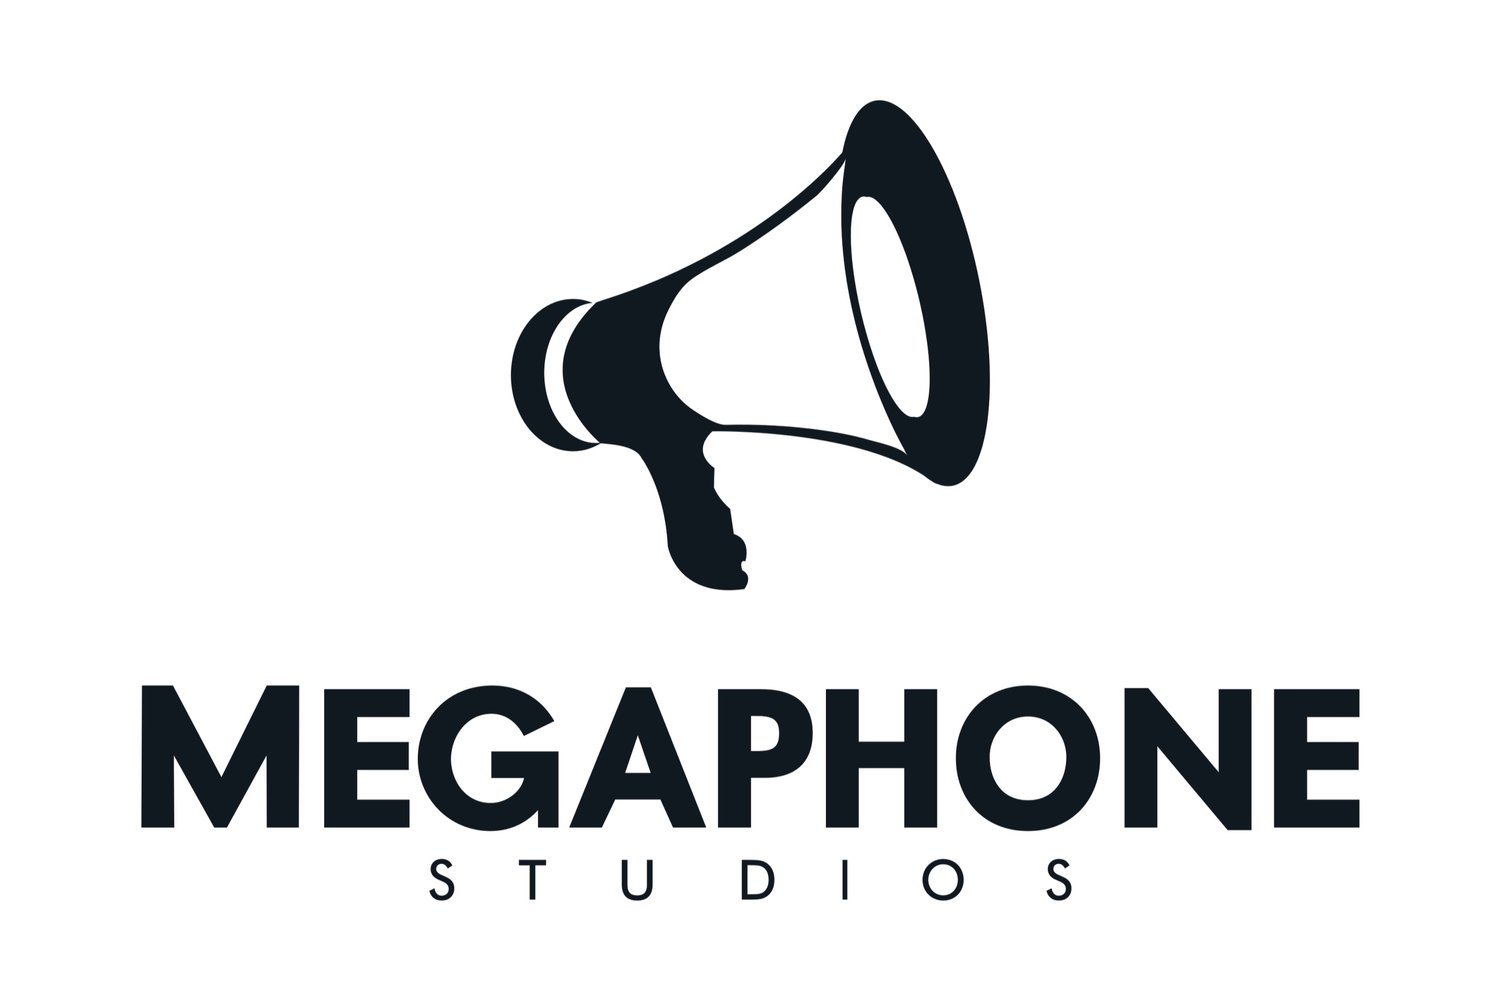 MEGAPHONE STUDIOS